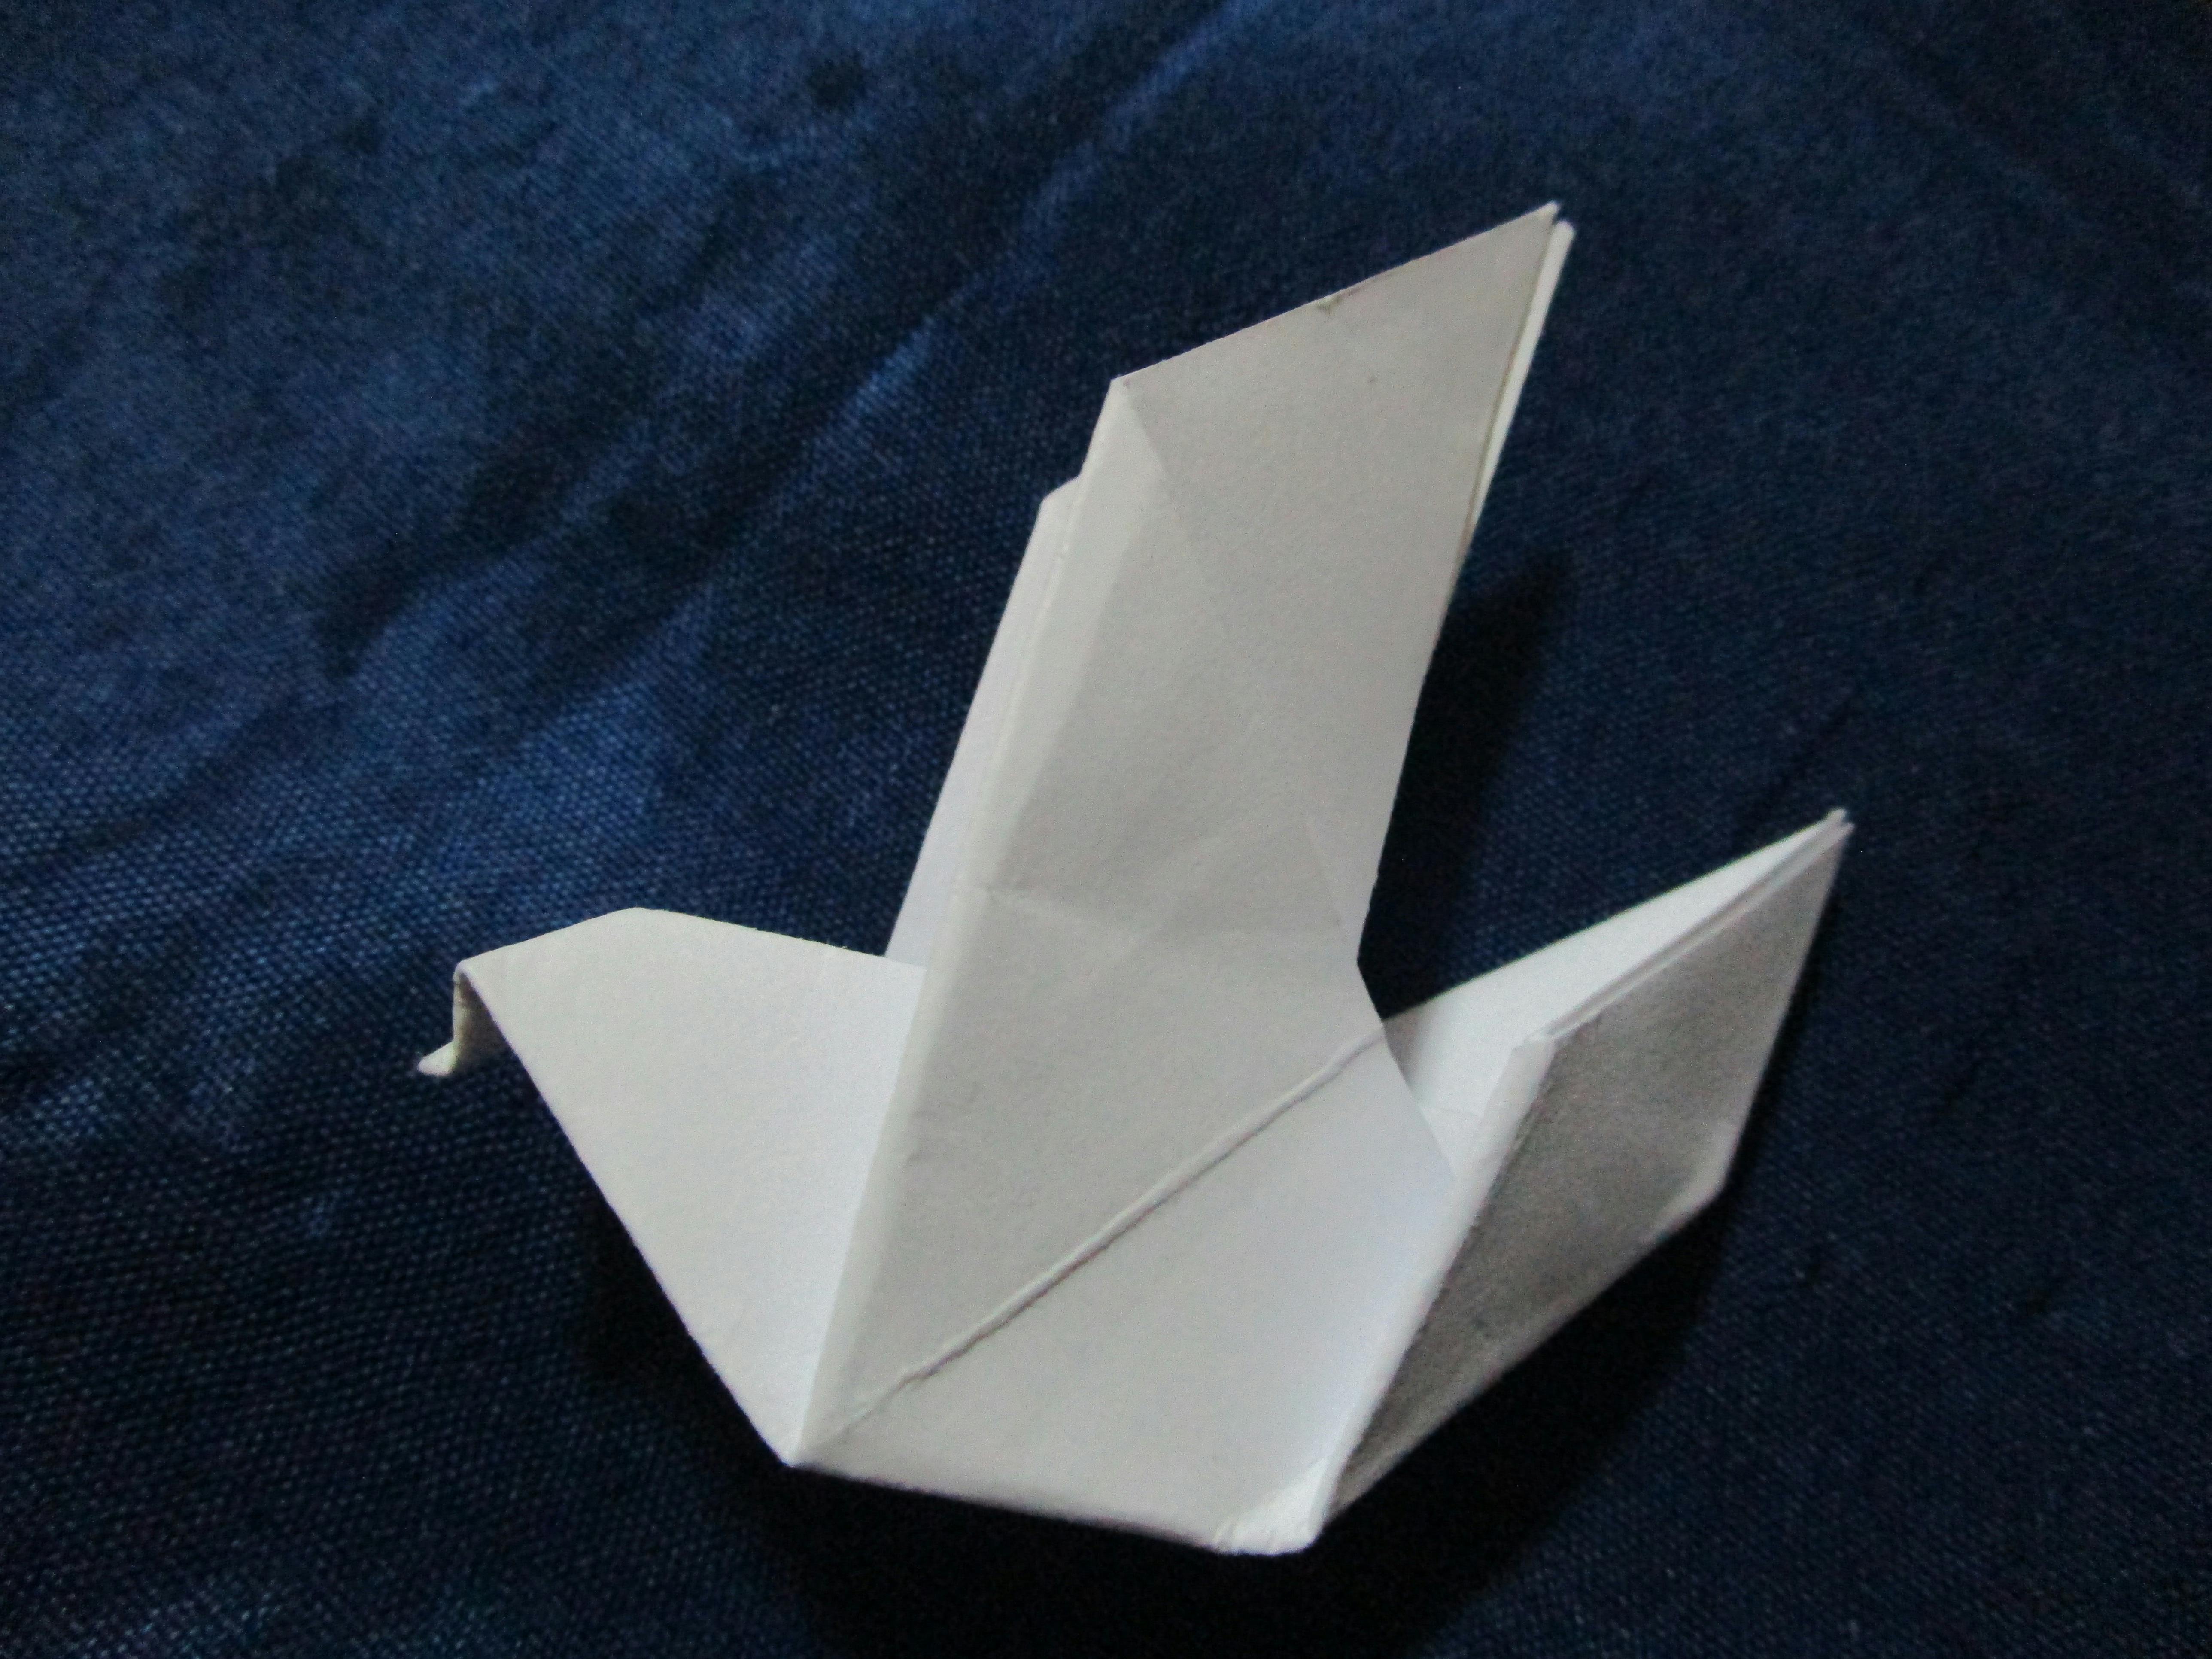 Free stock photo of Origami bird paper art folding white blue